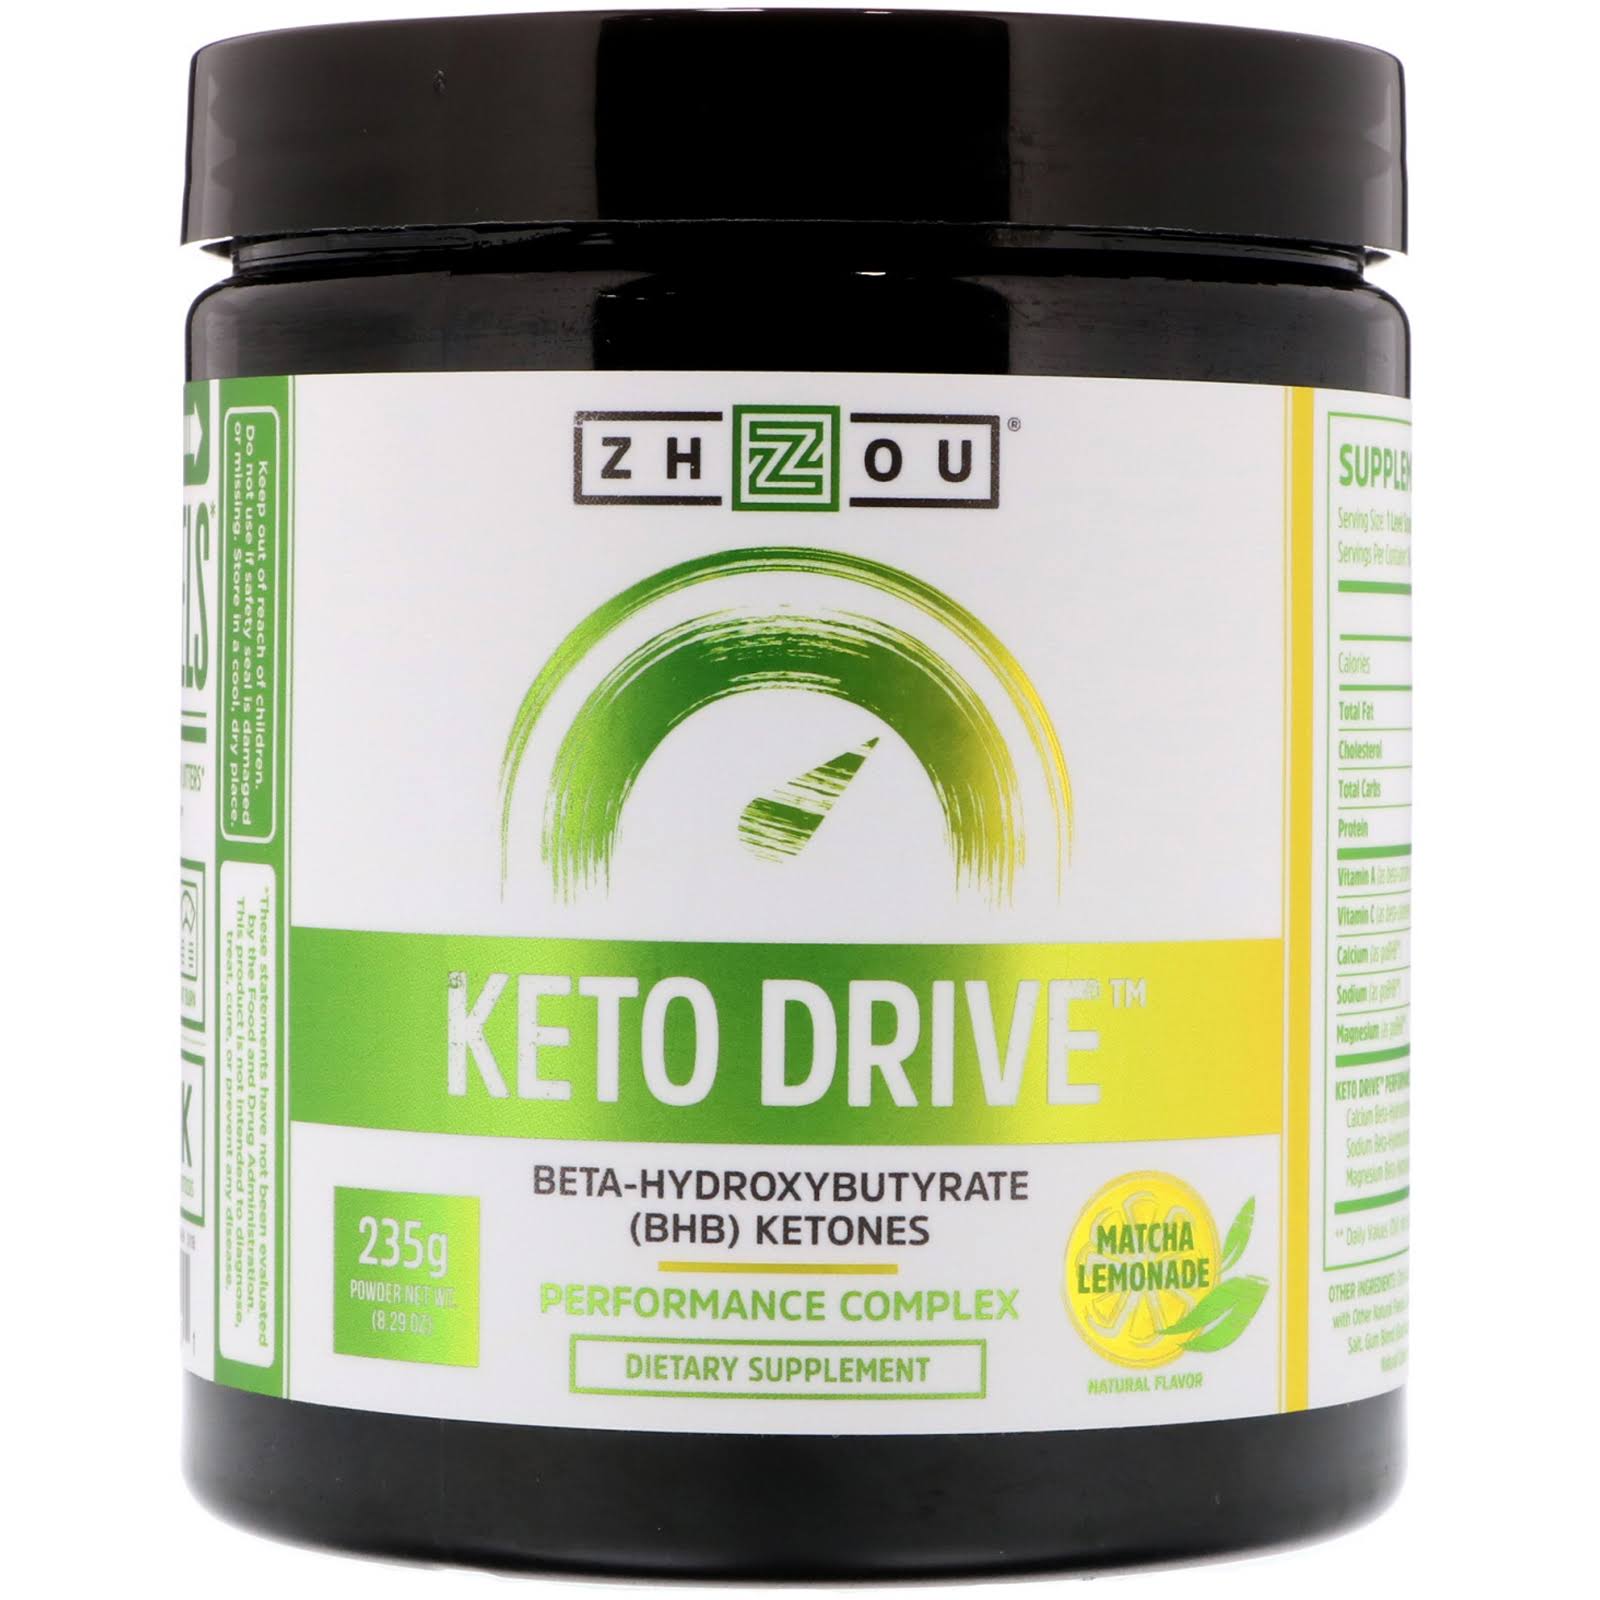 Zhou Nutrition Keto Drive Supplement - Matcha Lemonade, 8.29oz